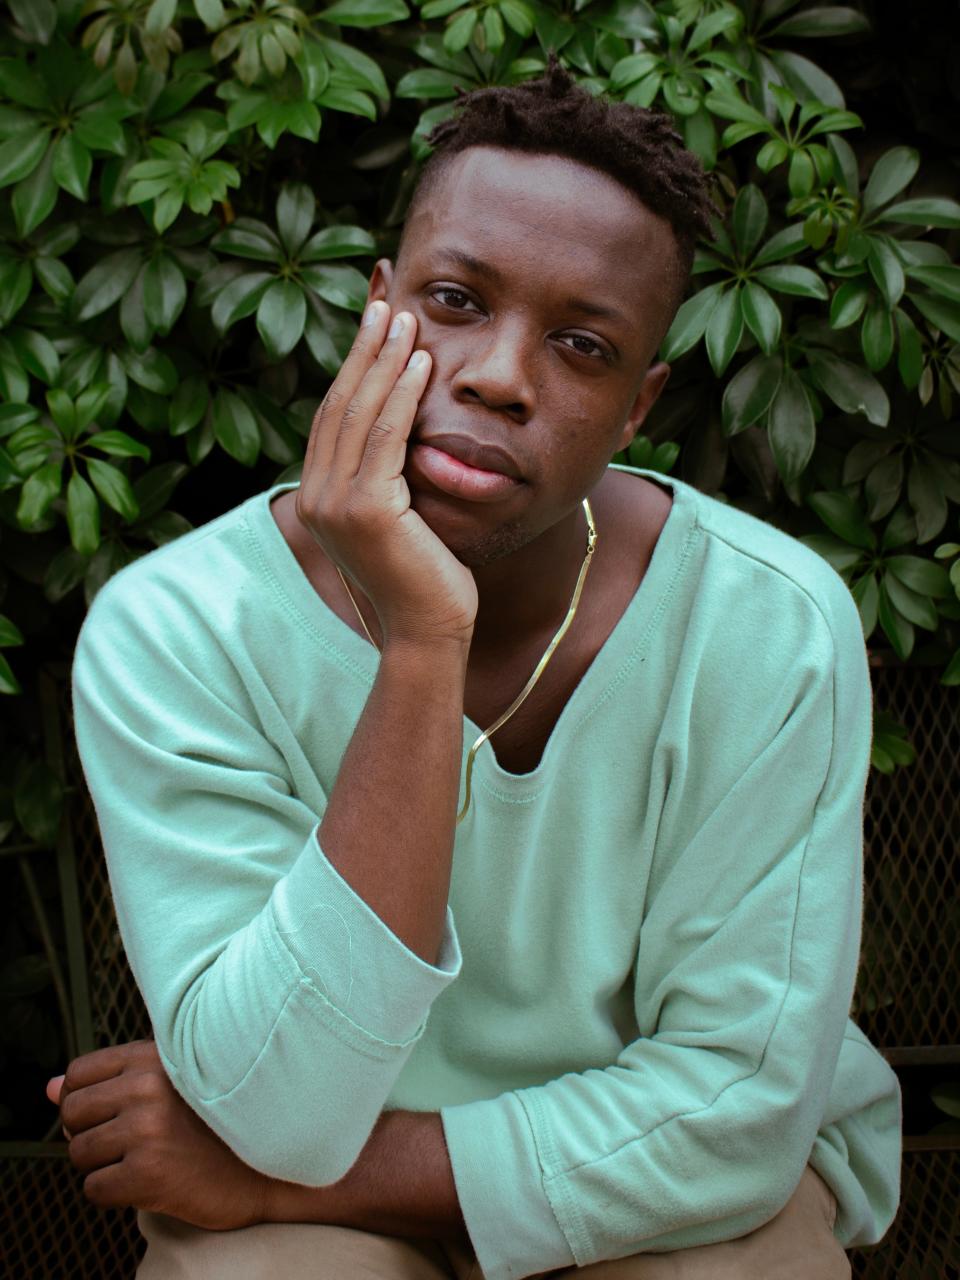 Ringling College student Jesse Clark explores a view of optimism in Black communities in his photo exhibit “Everglow” at Art Center Sarasota.